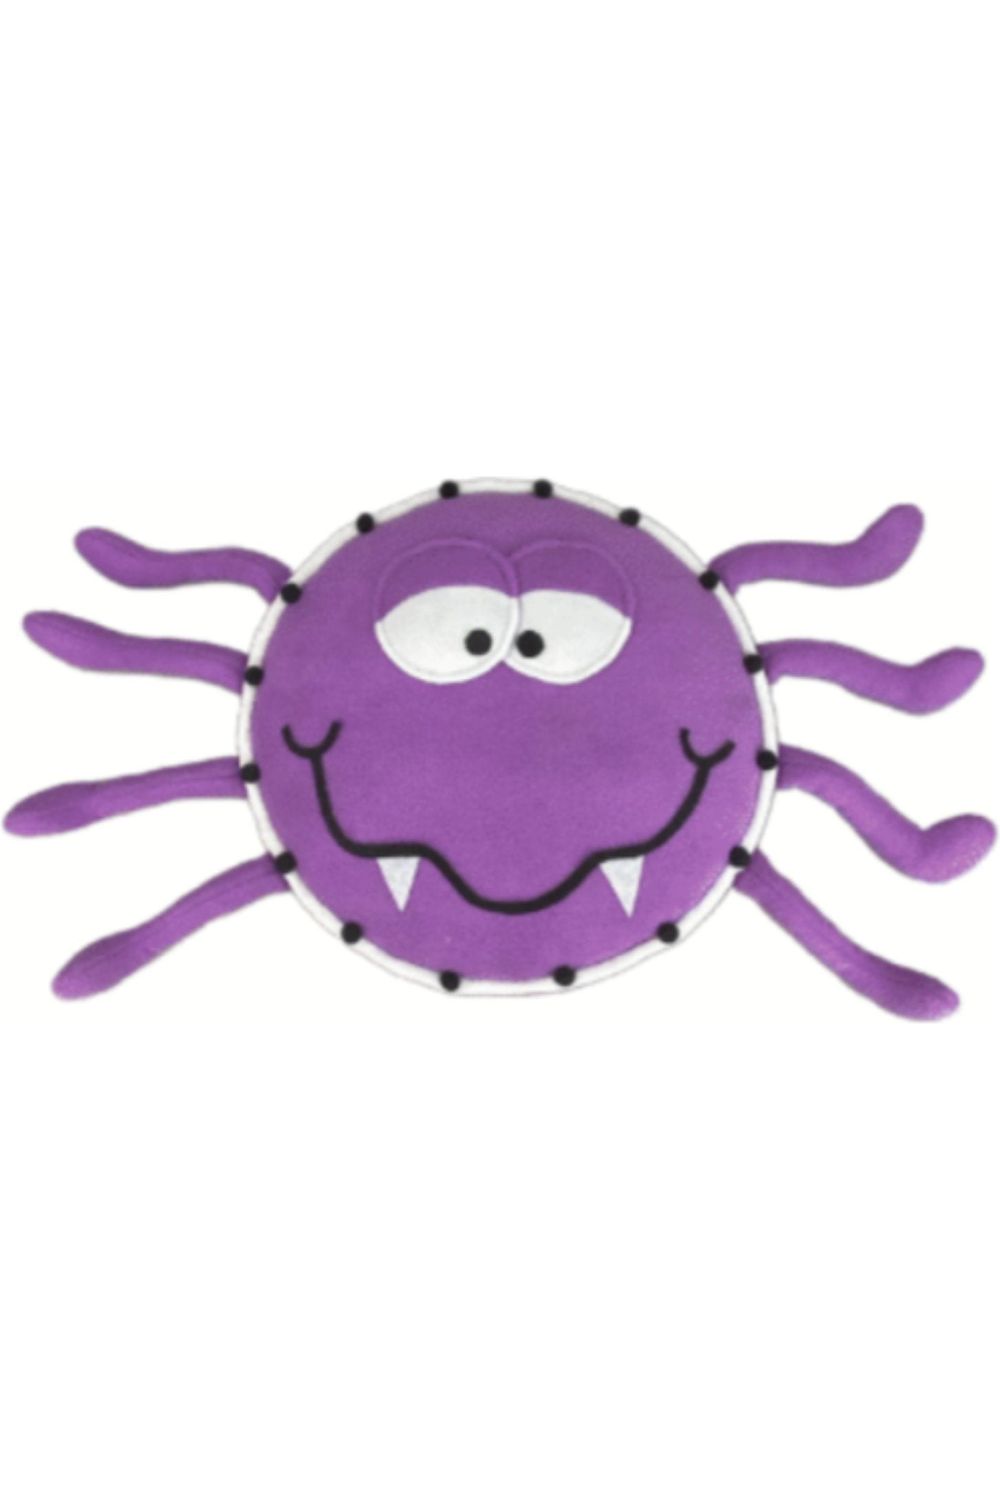 12" Plush Spider Wreath Accent: Purple - Michelle's aDOORable Creations - Wreath Enhancement